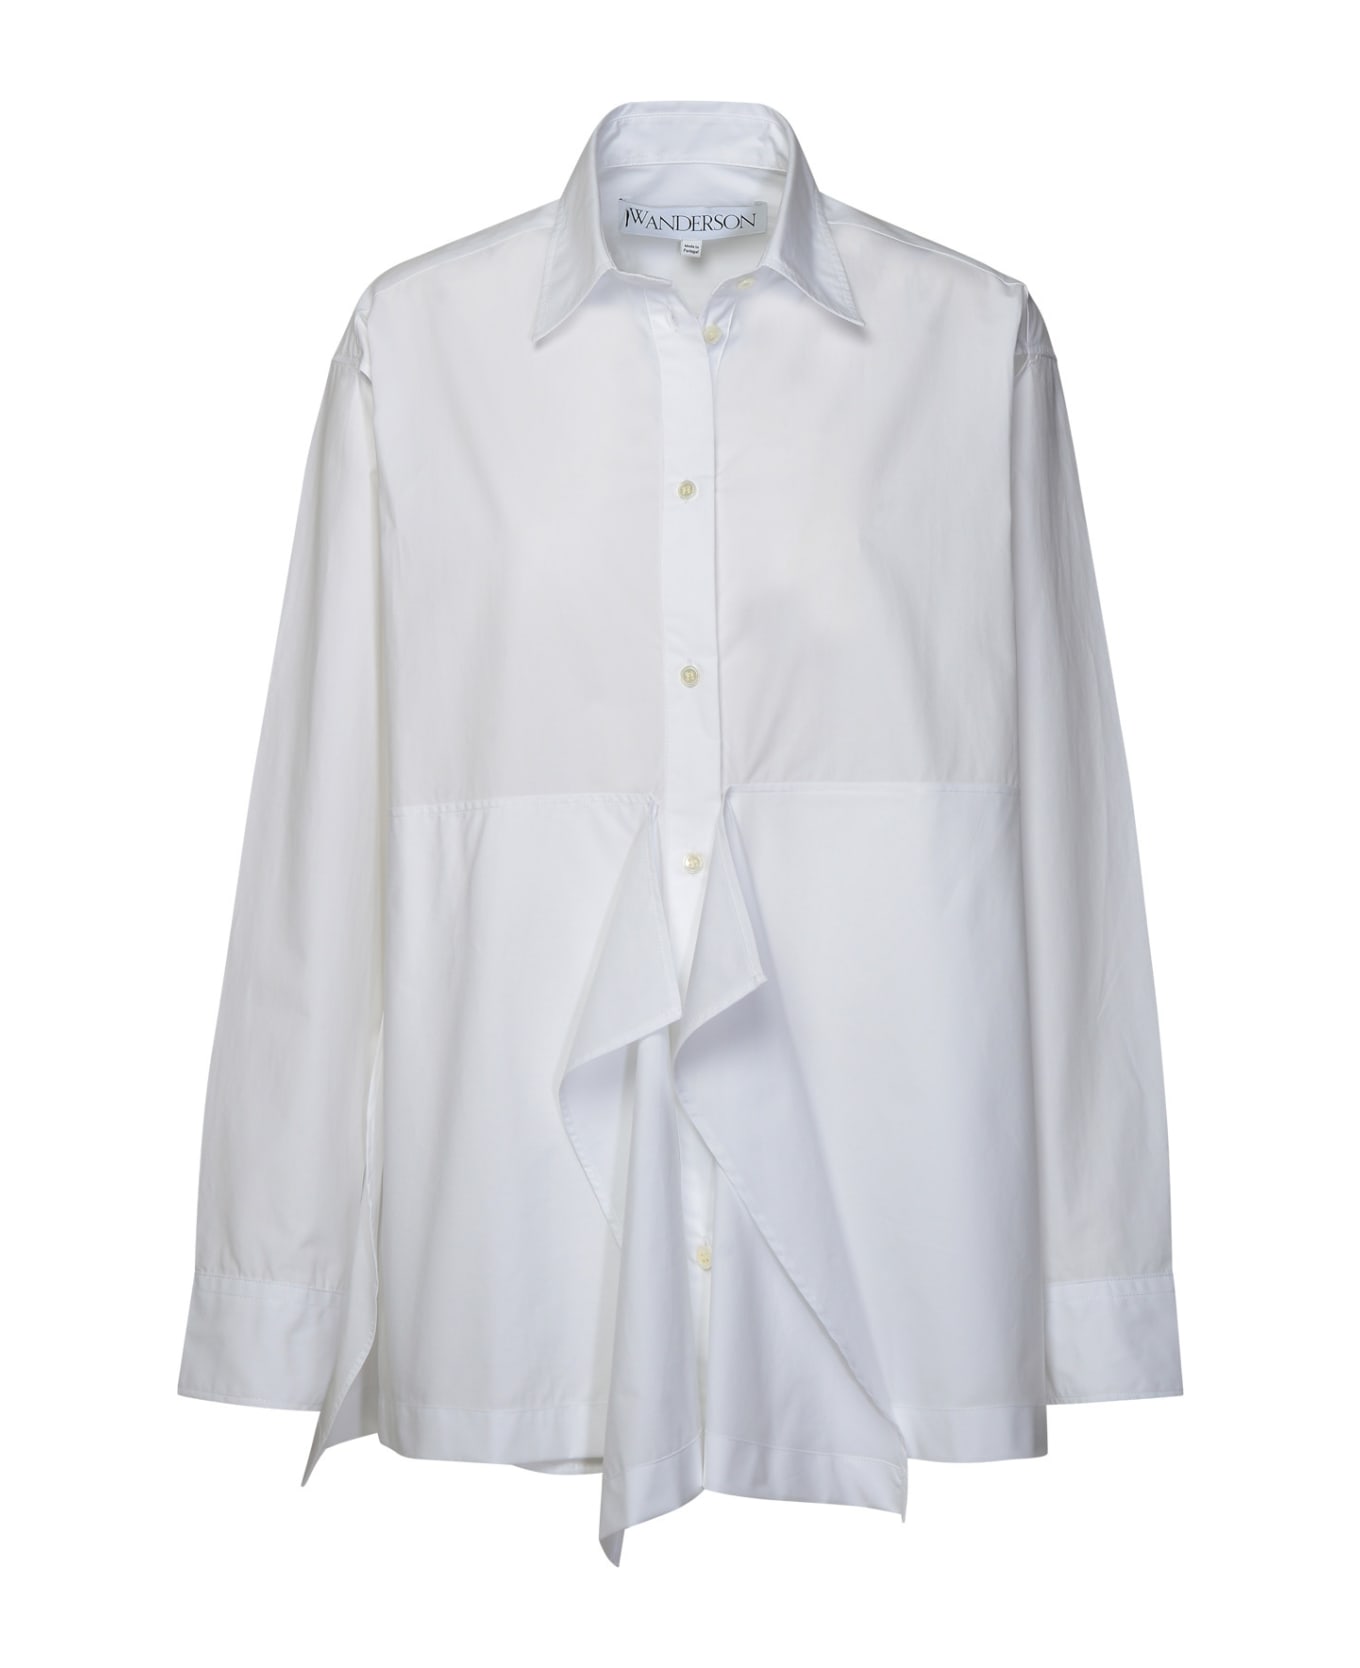 J.W. Anderson 'peplum' White Cotton Shirt - White